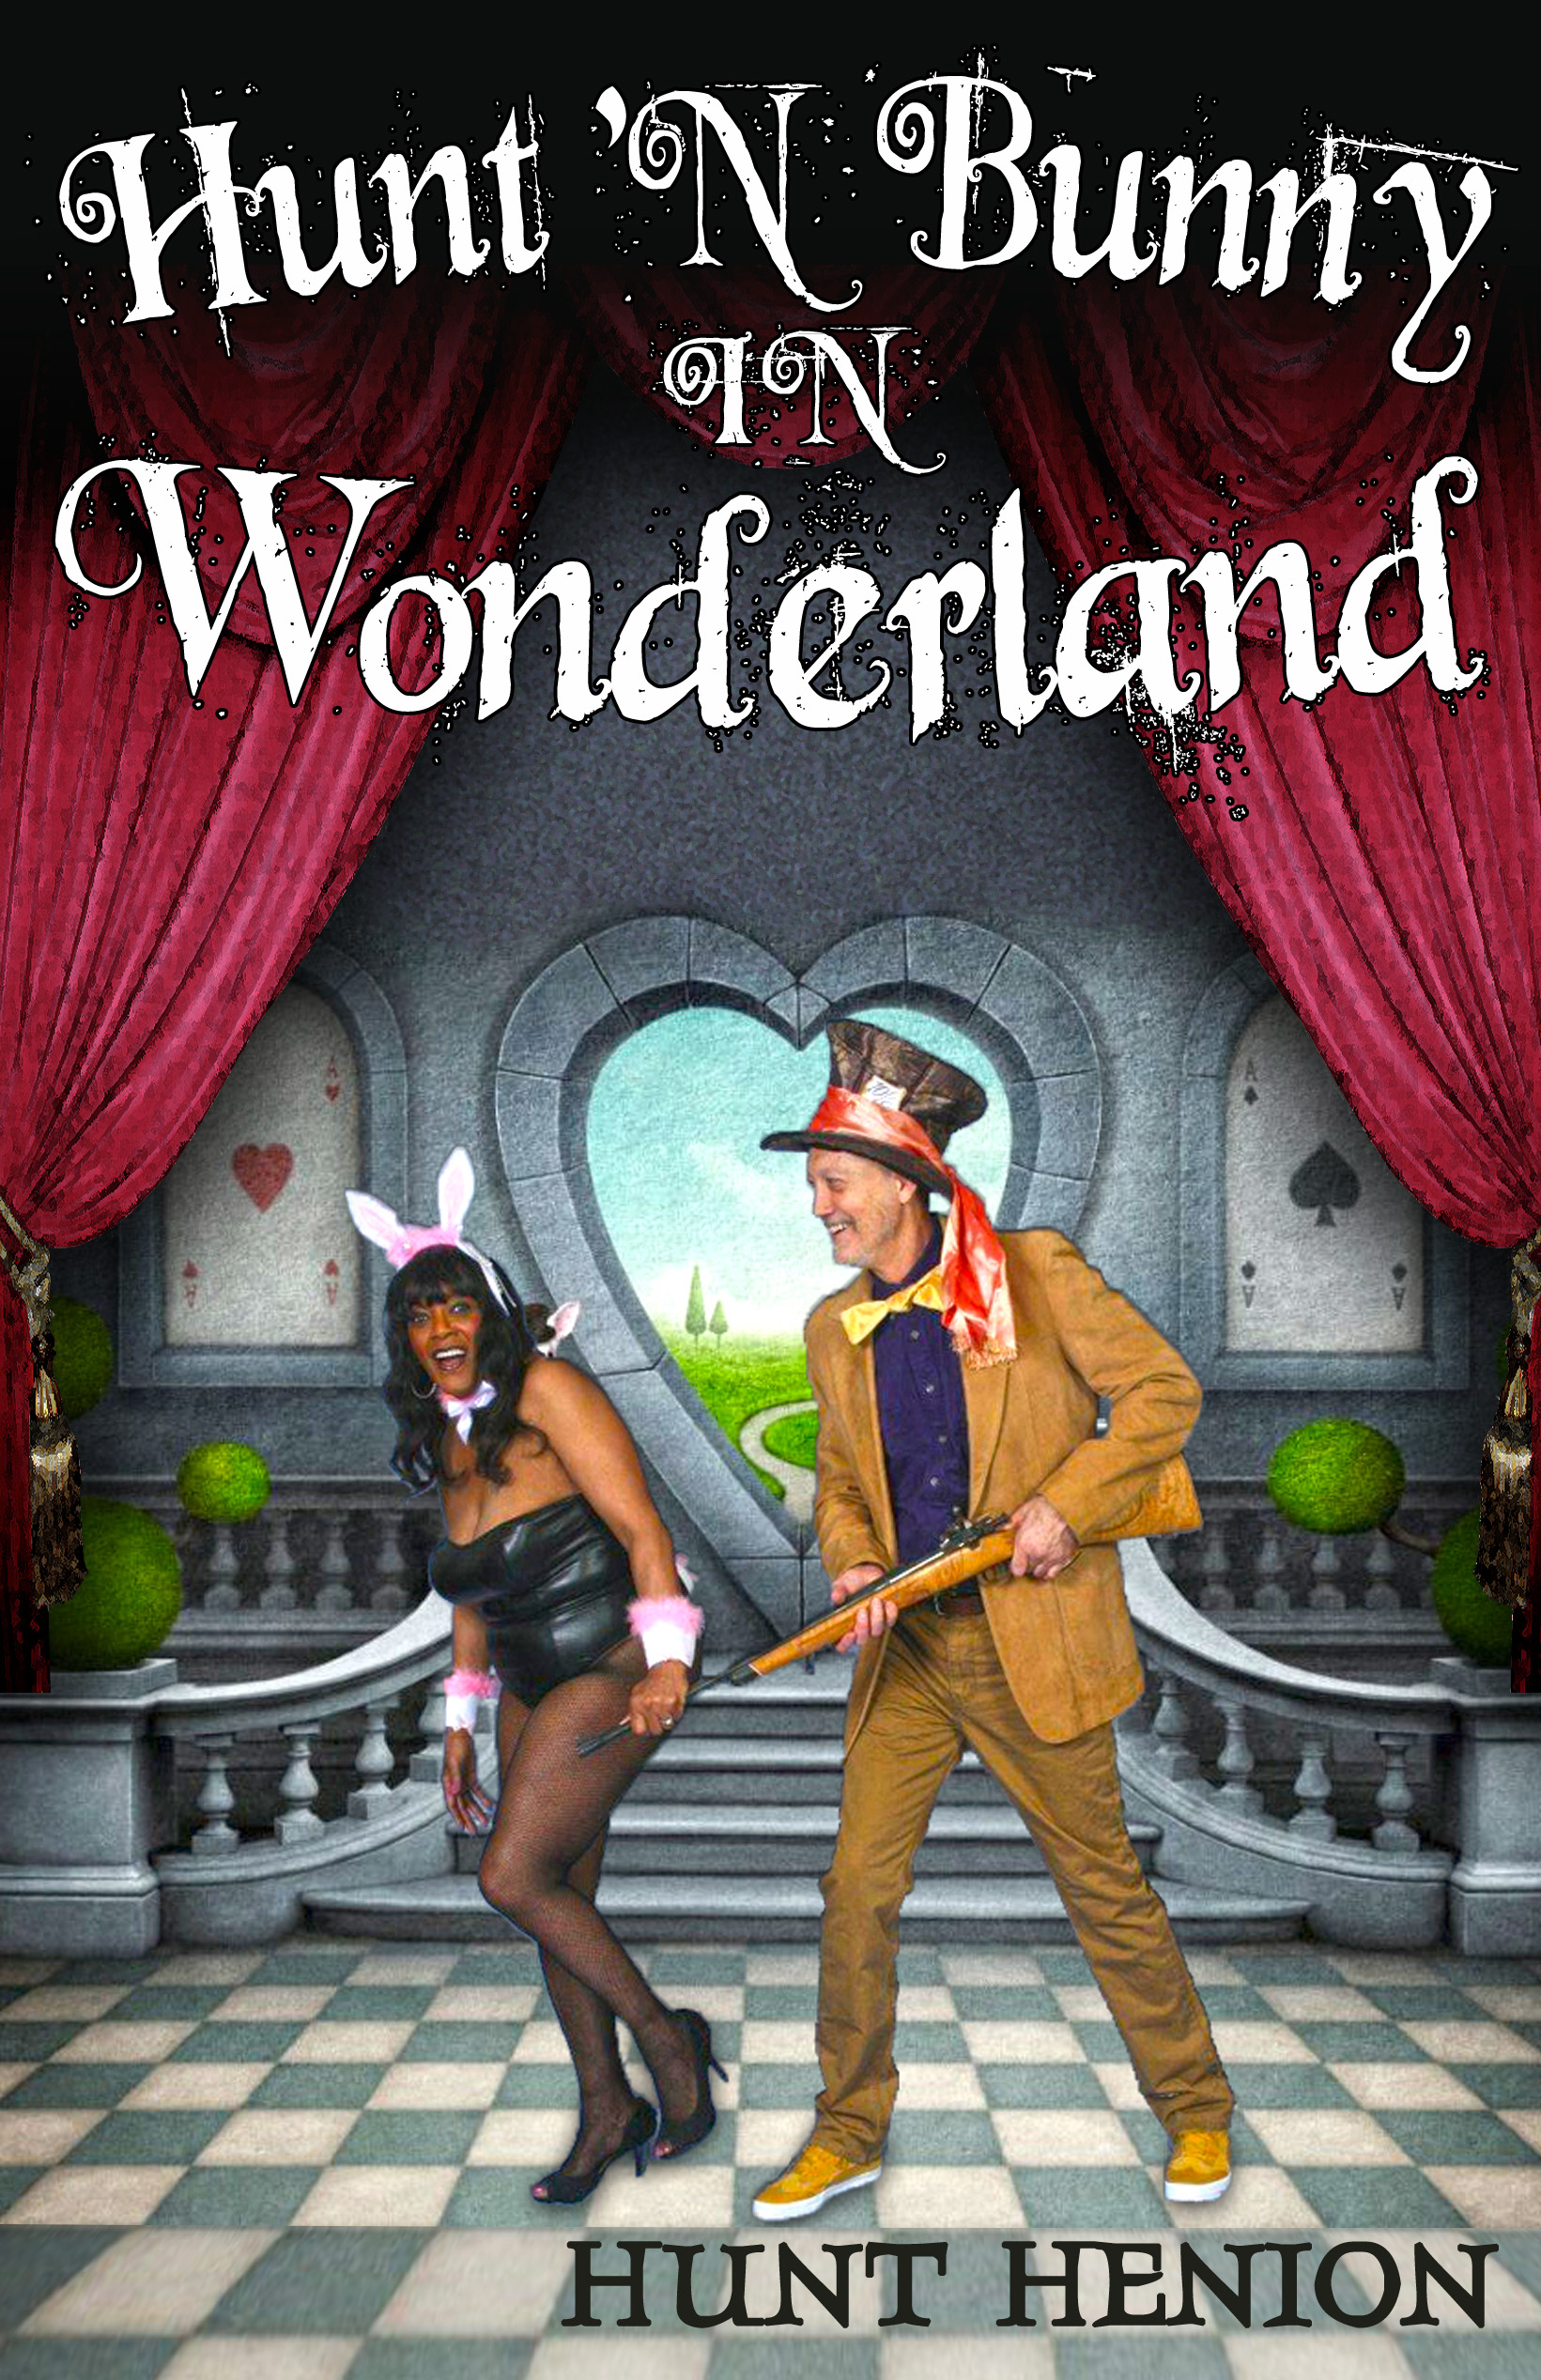 Relationship Revelations from Hunt & Bunny's Adventures in Wonderland